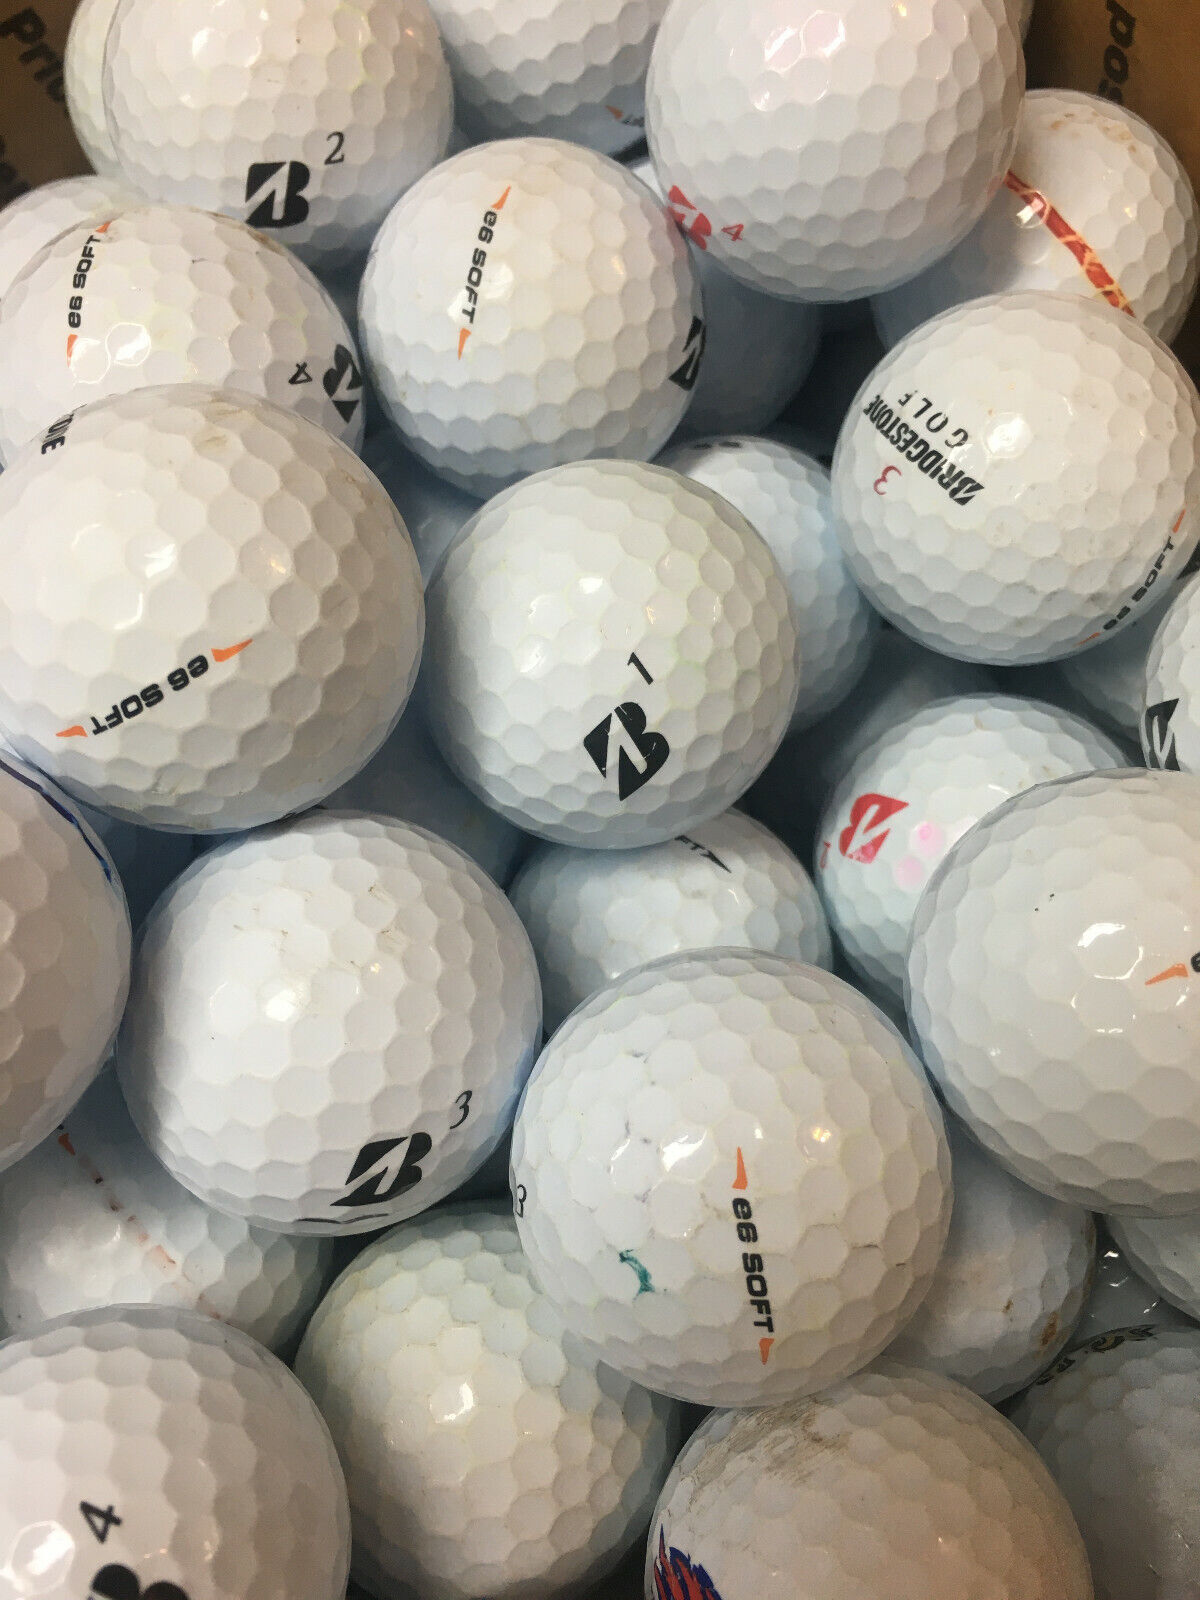 15 Bridgestone E6 Soft Premium AAA Used Golf Balls